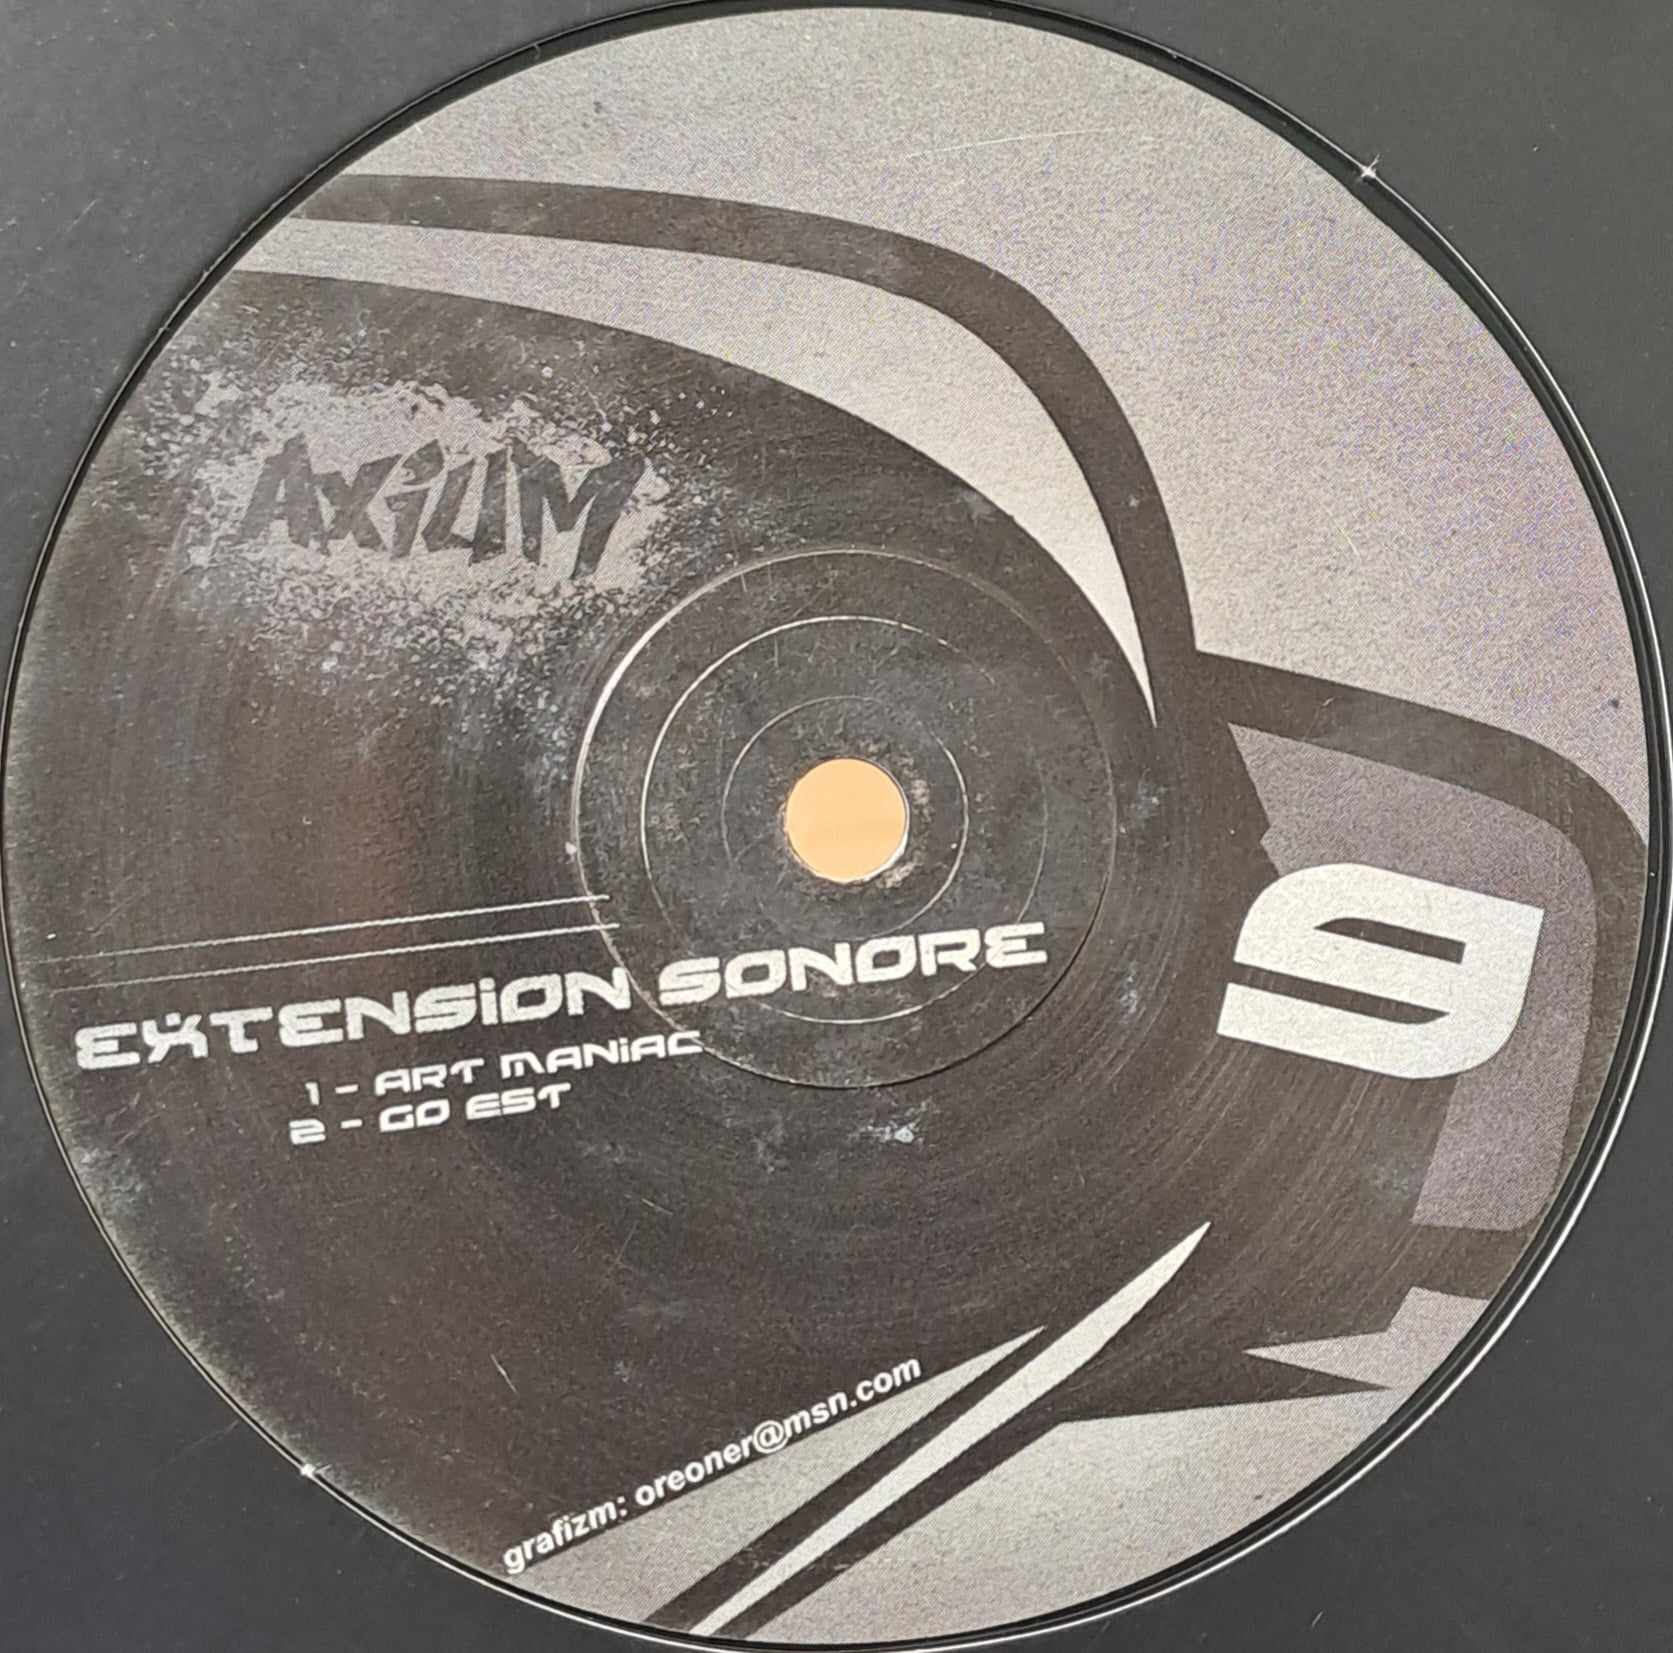 Axium 09 - vinyle break